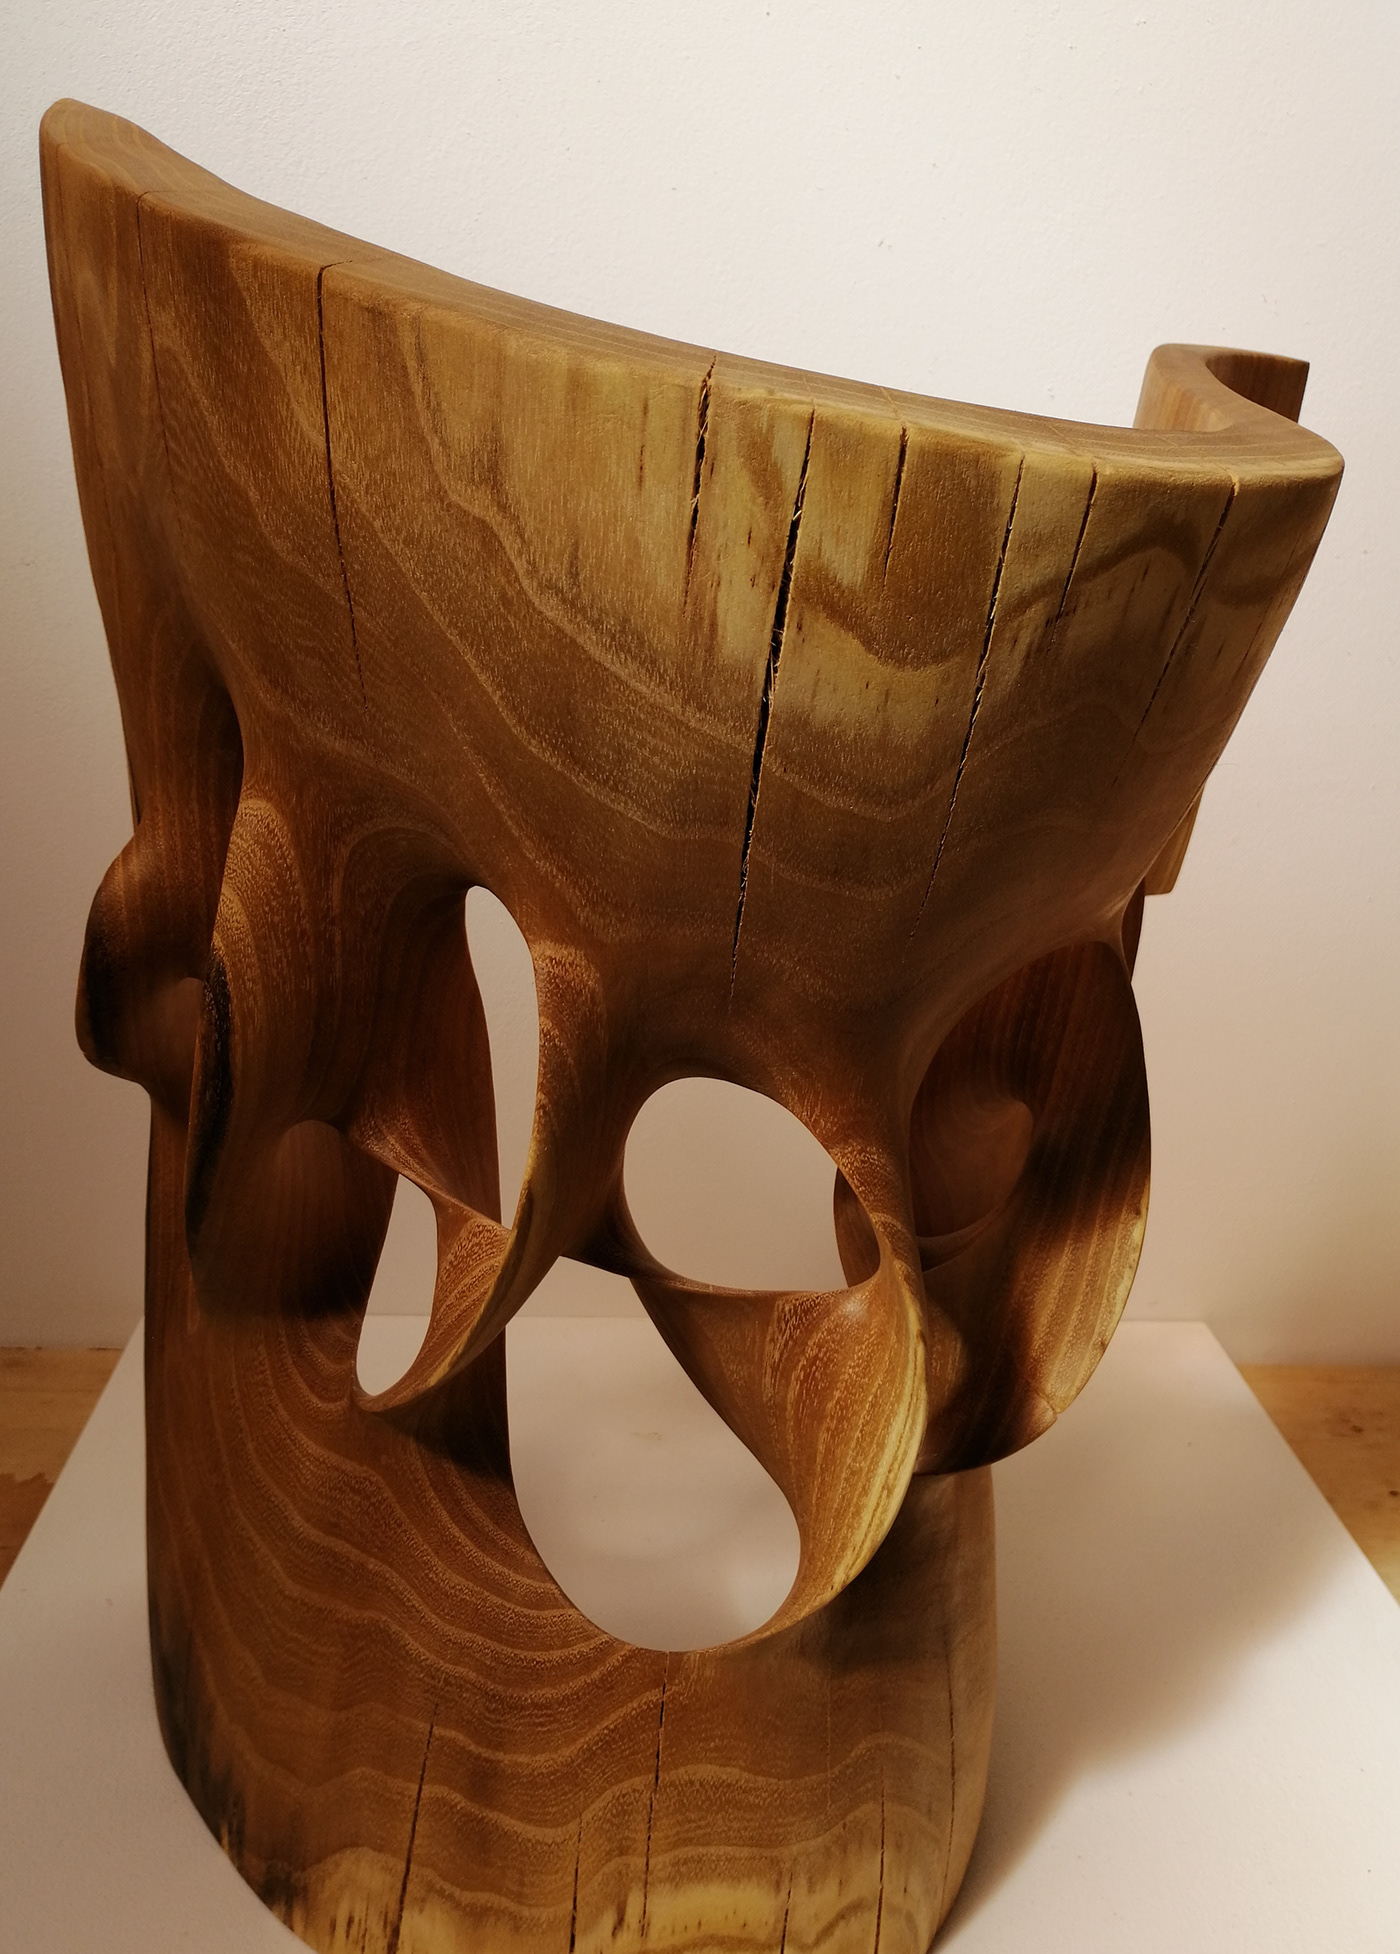 wood sculpture sculpting  wood carving wood working  madera Fusta  talla